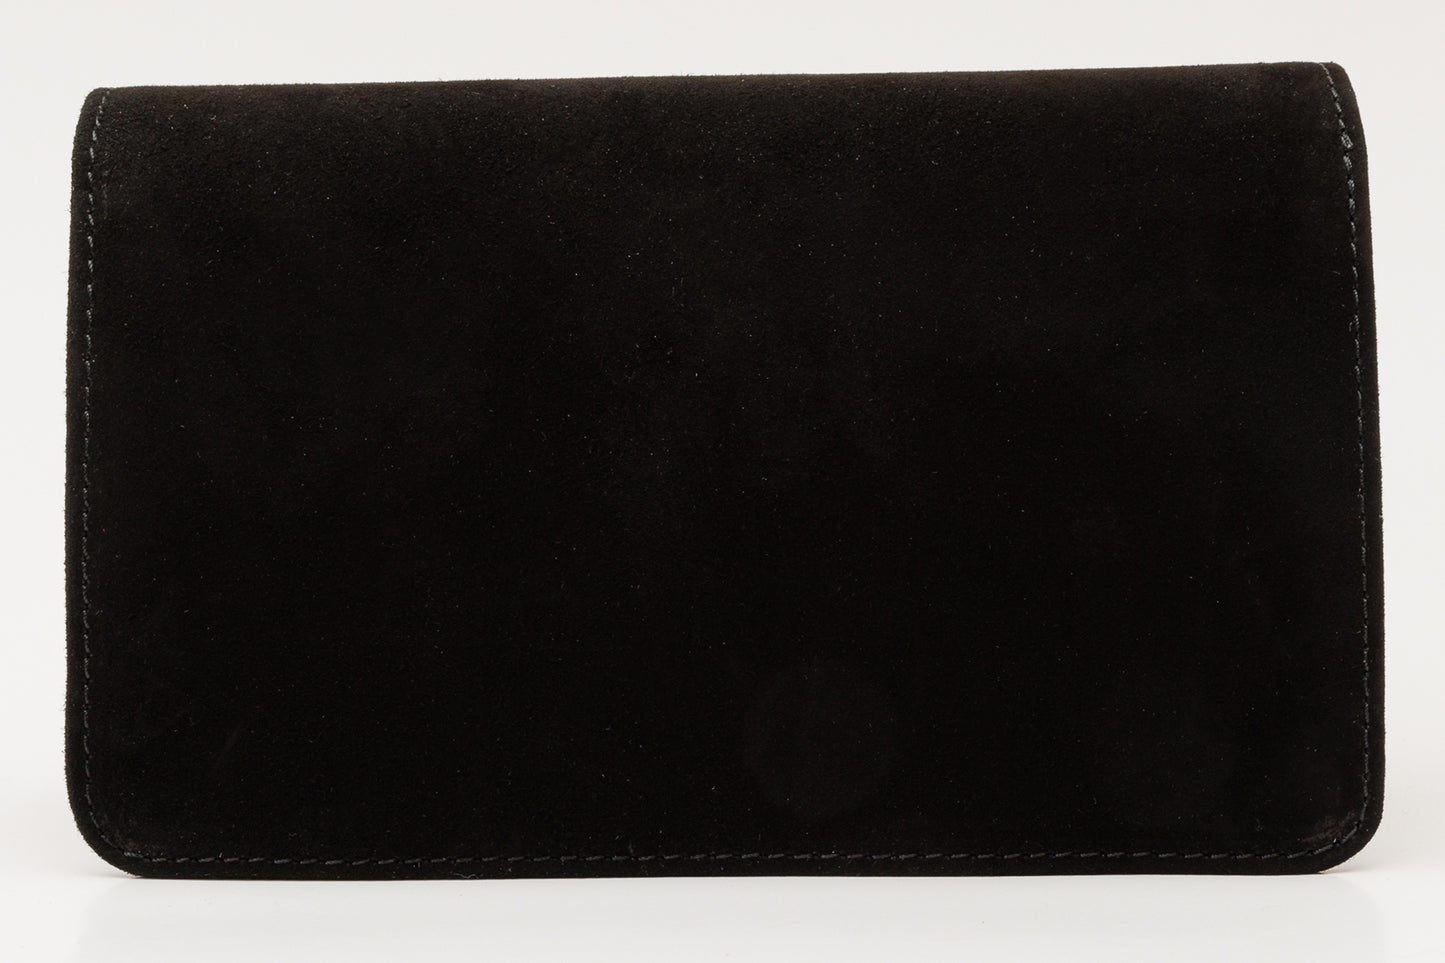 The California Black Suede Leather Handbag